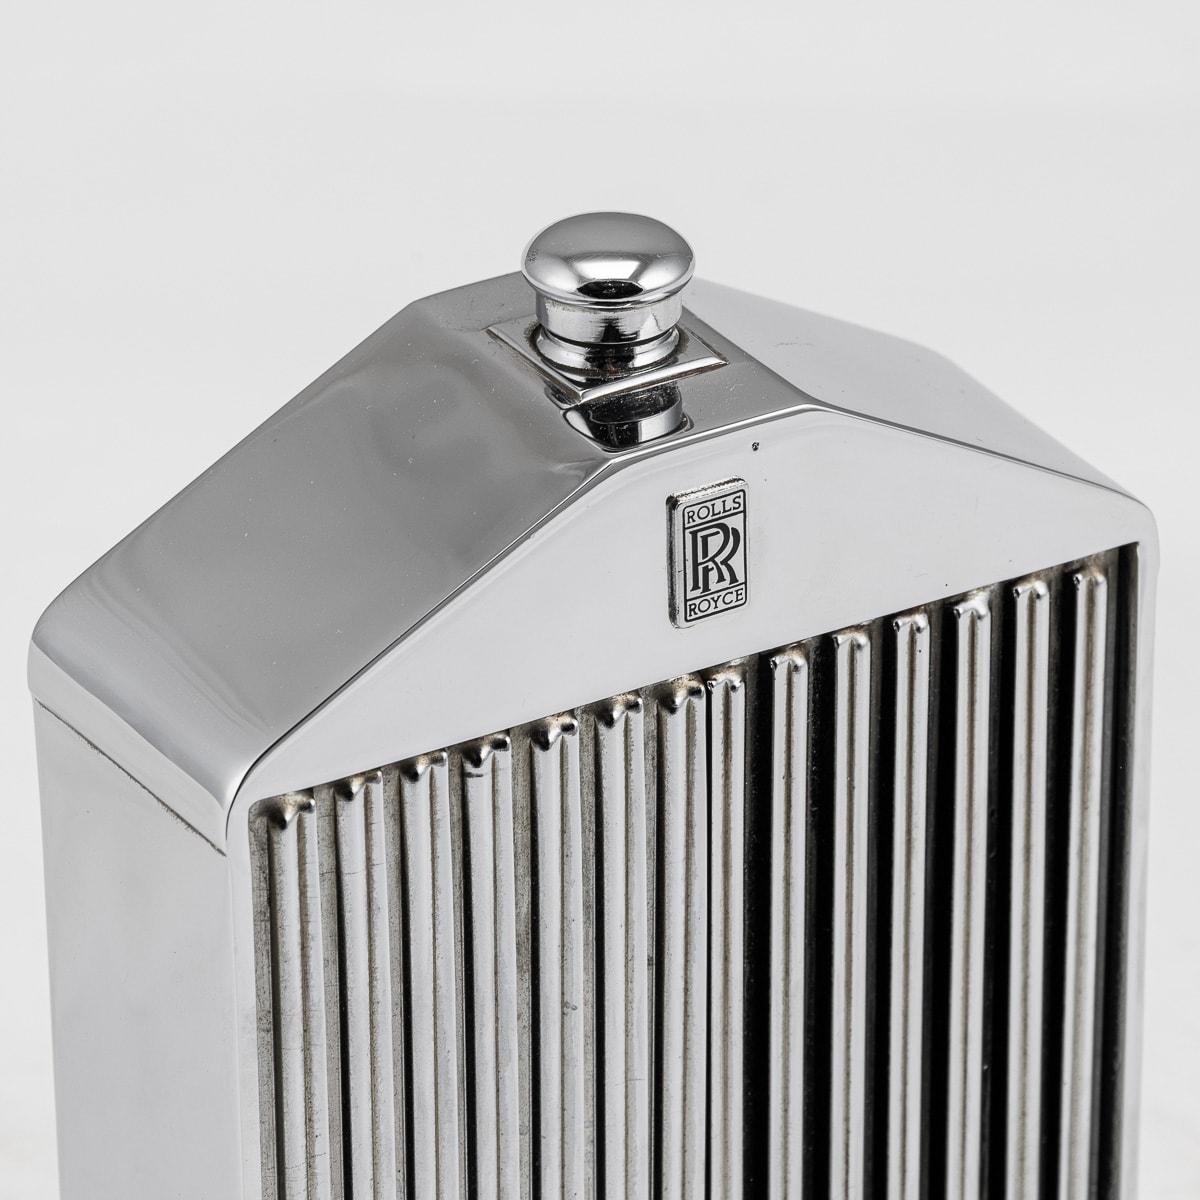 Metal 20th Century Stylish Ruddspeed Rolls Royce Radiator Flask / Decanter c.1960